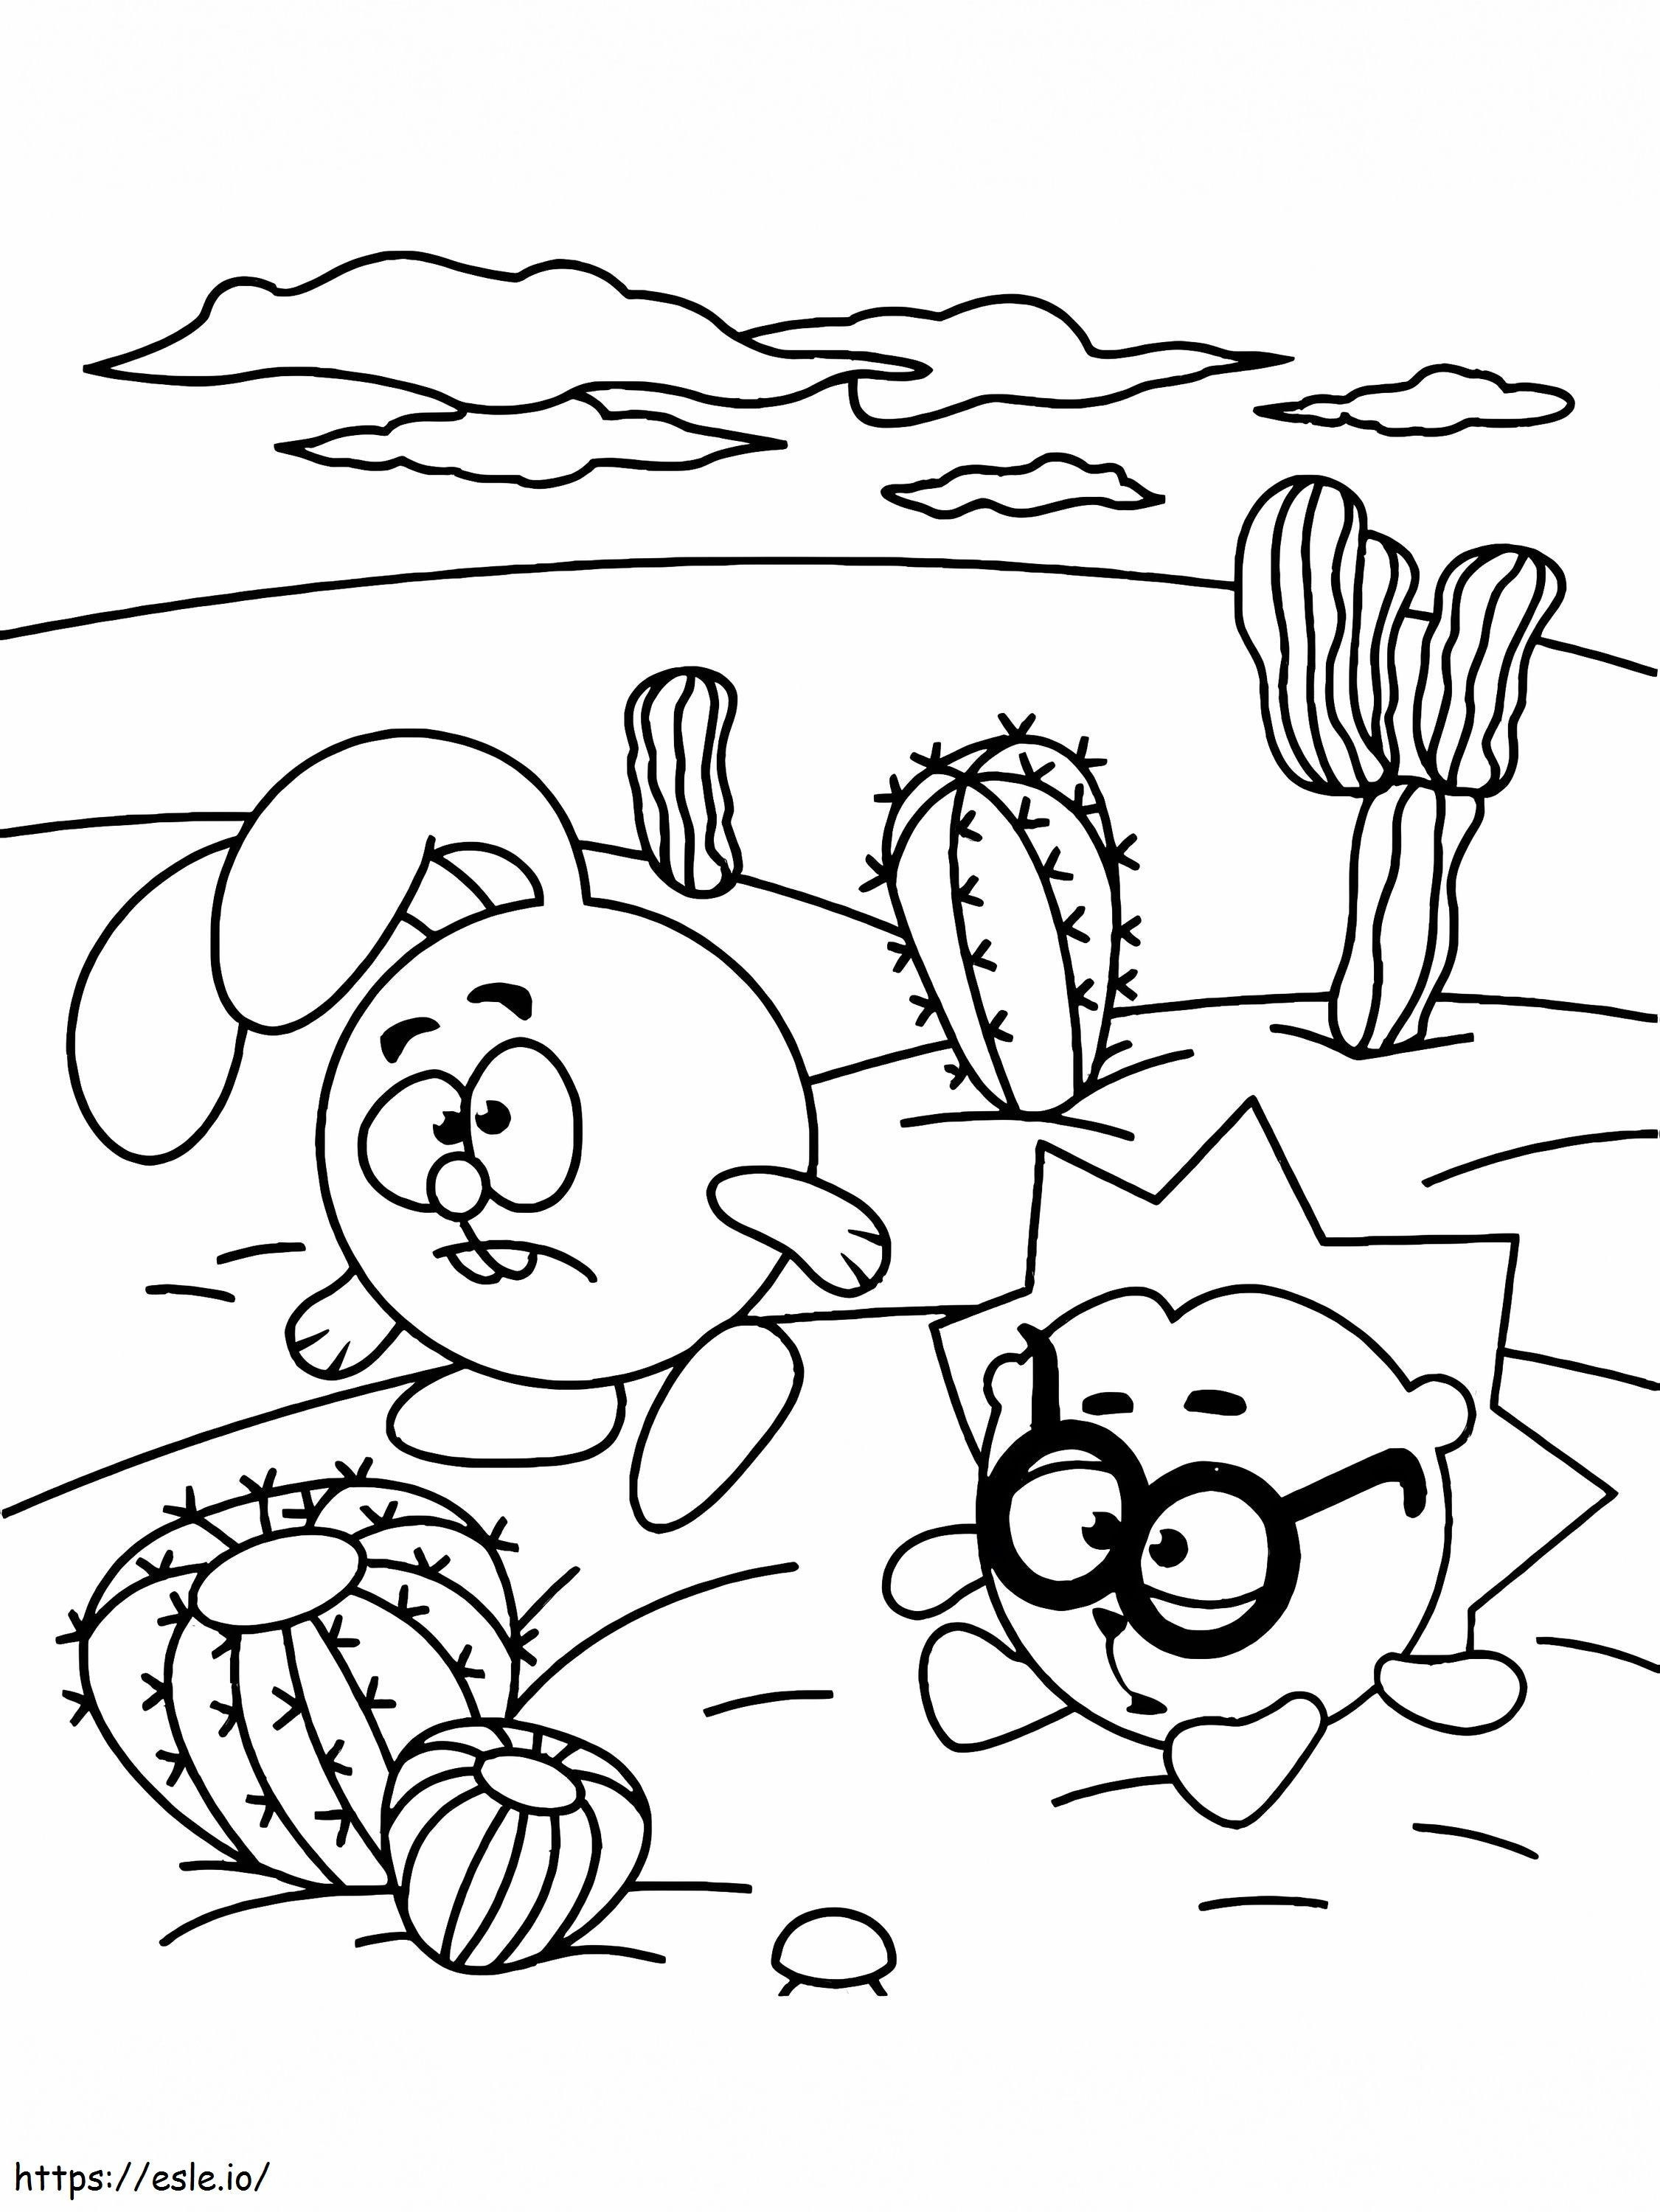 Chikoriki And PogoRiki coloring page